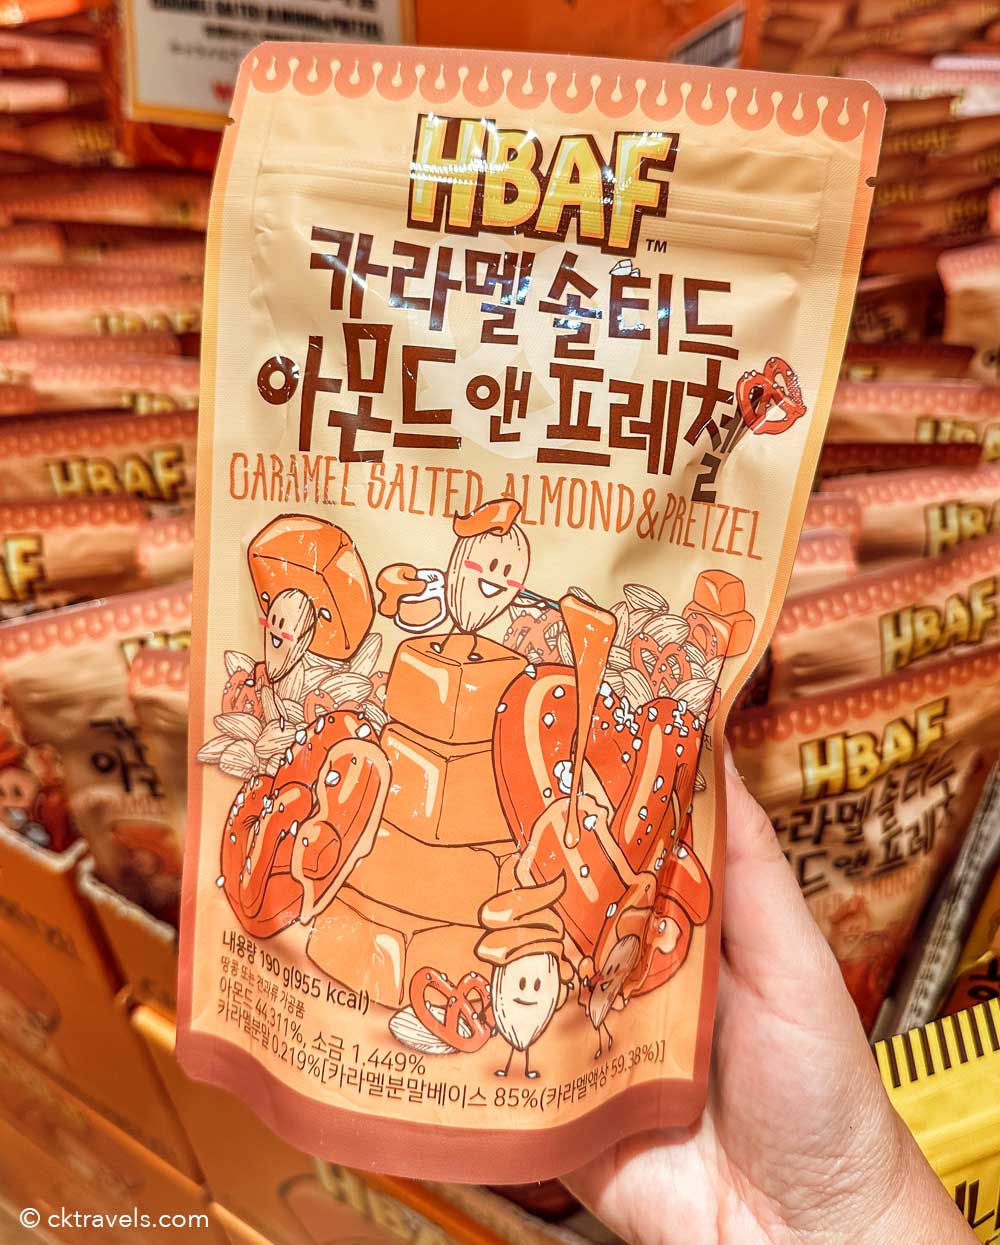 HBAF caramel salted almond and pretzels south korea